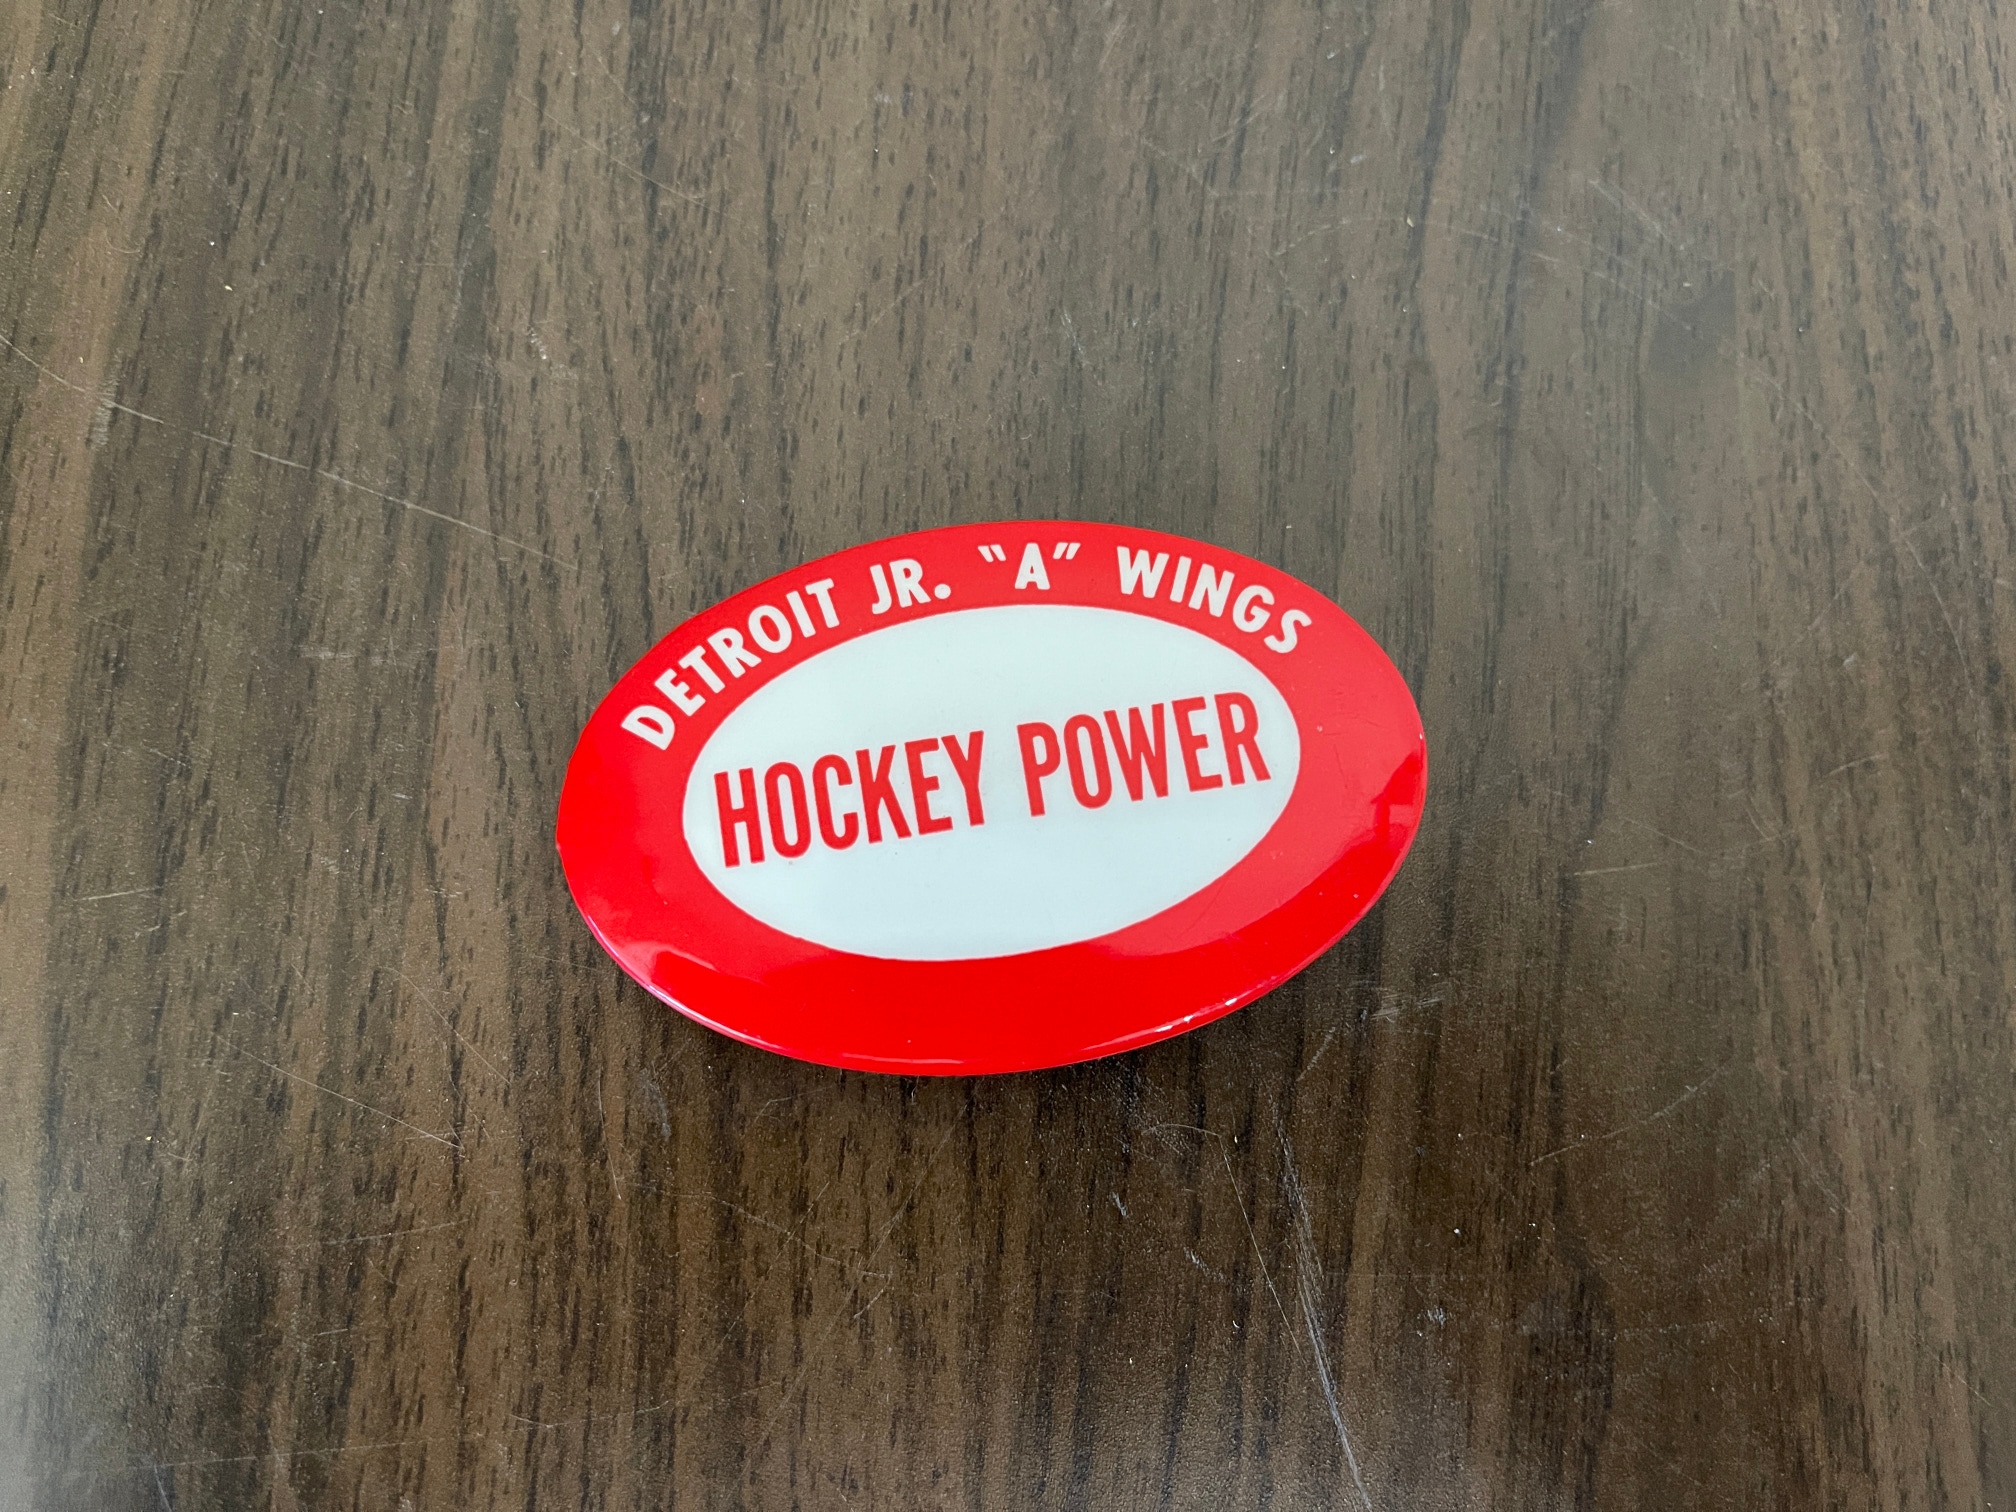 Detroit Jr. 'A' Wings SUPER VINTAGE 1970s HOCKEY POWER Junior Hockey Button Pin!